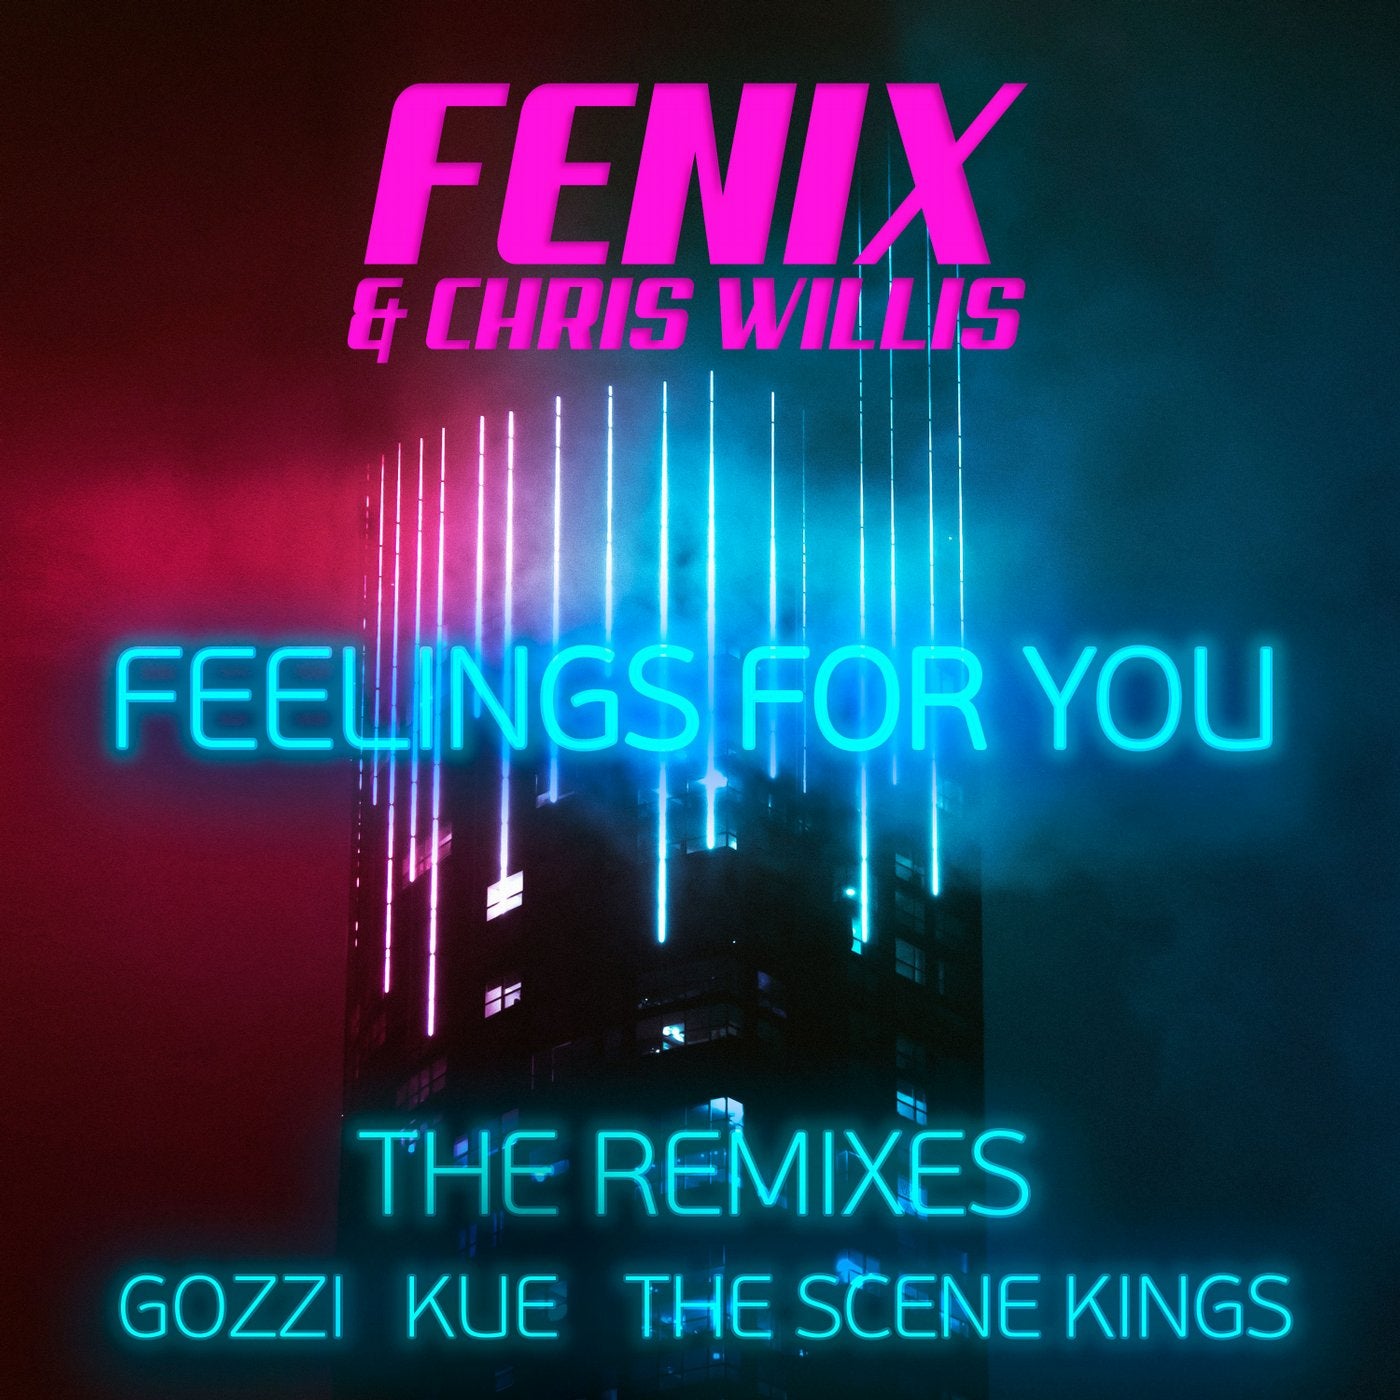 Feelings for you (Remixes)